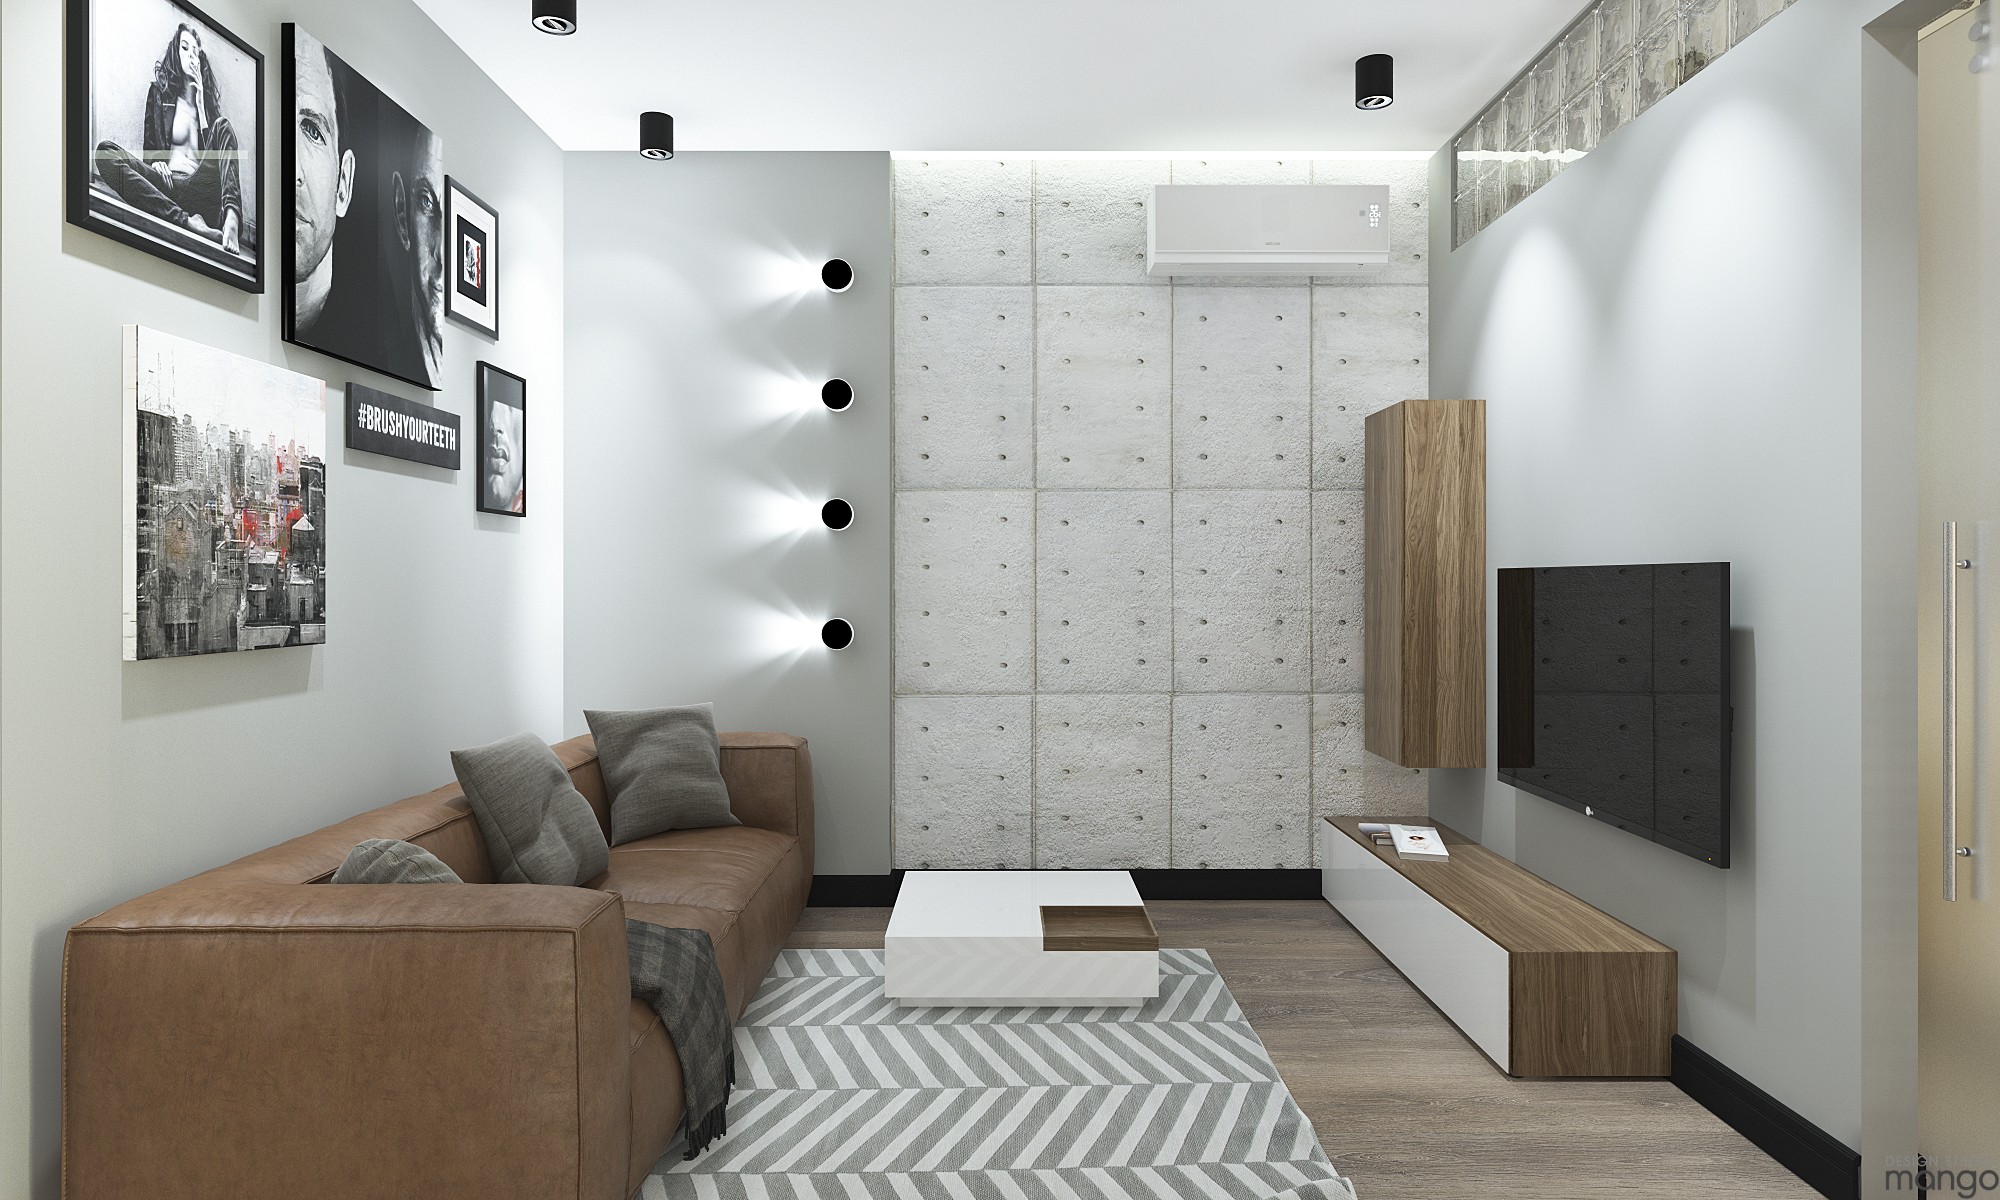 modern small living room design "width =" 2000 "height =" 1200 "srcset =" https://mileray.com/wp-content/uploads/2020/05/1588516089_789_Gorgeous-Living-Room-Designs-With-Variety-Of-Modern-and-Trendy.jpg 2000w, https: // mileray.com/wp-content/uploads/2016/10/Design-Studio-Mango9-8-300x180.jpg 300w, https://mileray.com/wp-content/uploads/2016/10/Design-Studio -Mango9 -8-768x461.jpg 768w, https://mileray.com/wp-content/uploads/2016/10/Design-Studio-Mango9-8-1024x614.jpg 1024w, https://mileray.com/wp -content / uploads / 2016/10 / Design-Studio-Mango9-8-696x418.jpg 696w, https://mileray.com/wp-content/uploads/2016/10/Design-Studio-Mango9-8-1068x641. jpg 1068w, https://mileray.com/wp-content/uploads/2016/10/Design-Studio-Mango9-8-700x420.jpg 700w "sizes =" (maximum width: 2000px) 100vw, 2000px